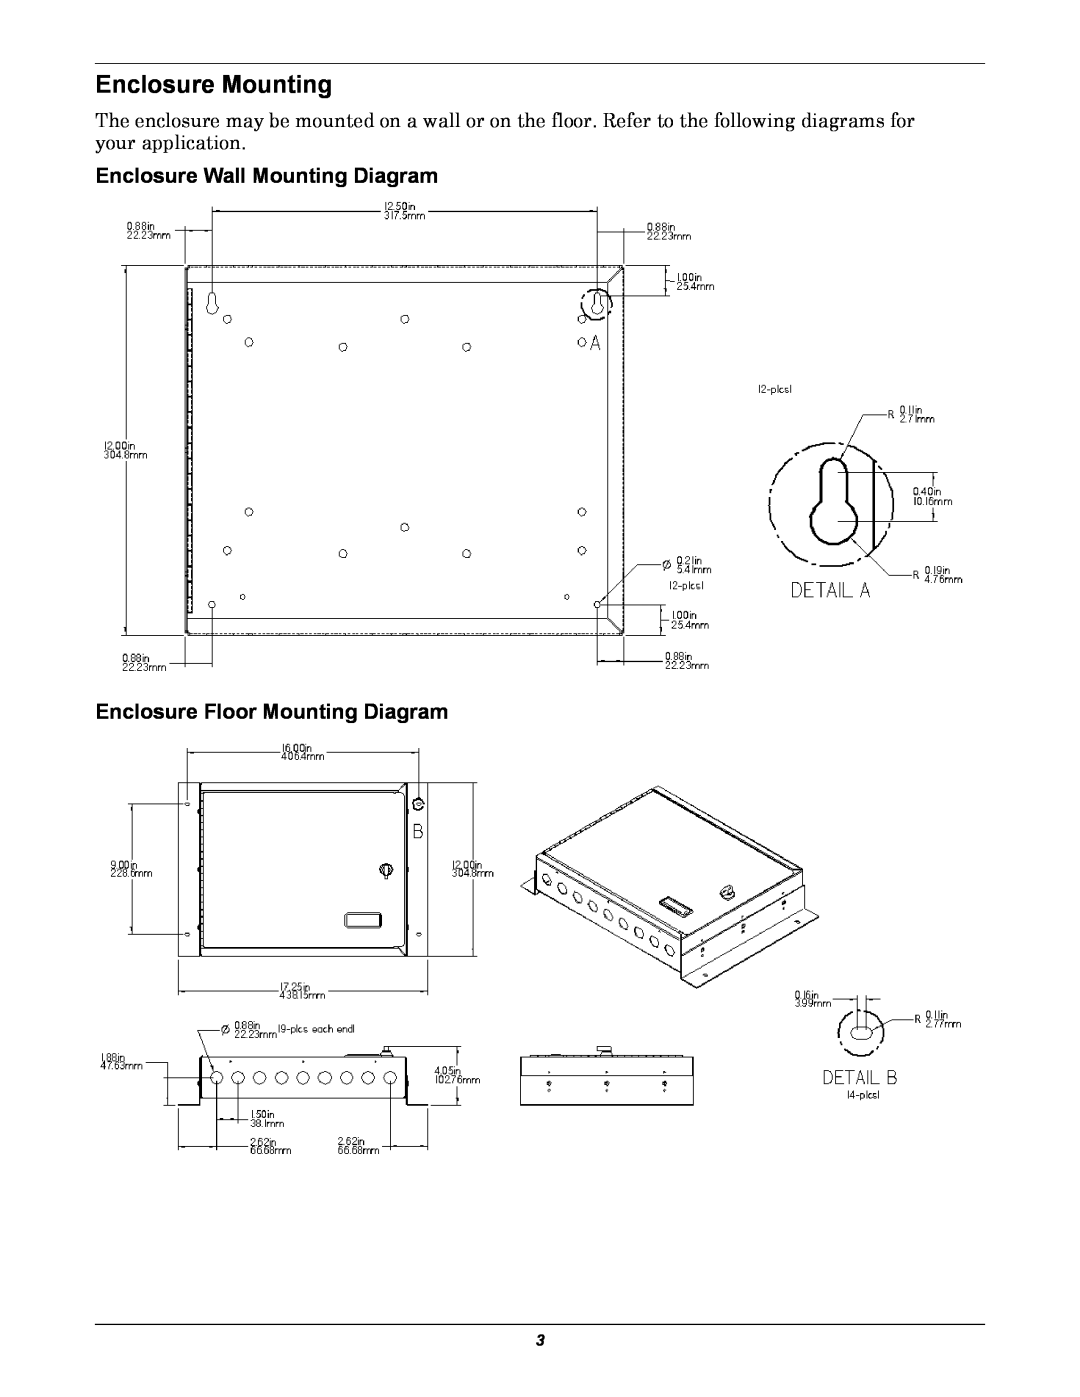 Emerson SITETPI-E V3 dimensions Enclosure Mounting, Enclosure Wall Mounting Diagram Enclosure Floor Mounting Diagram 